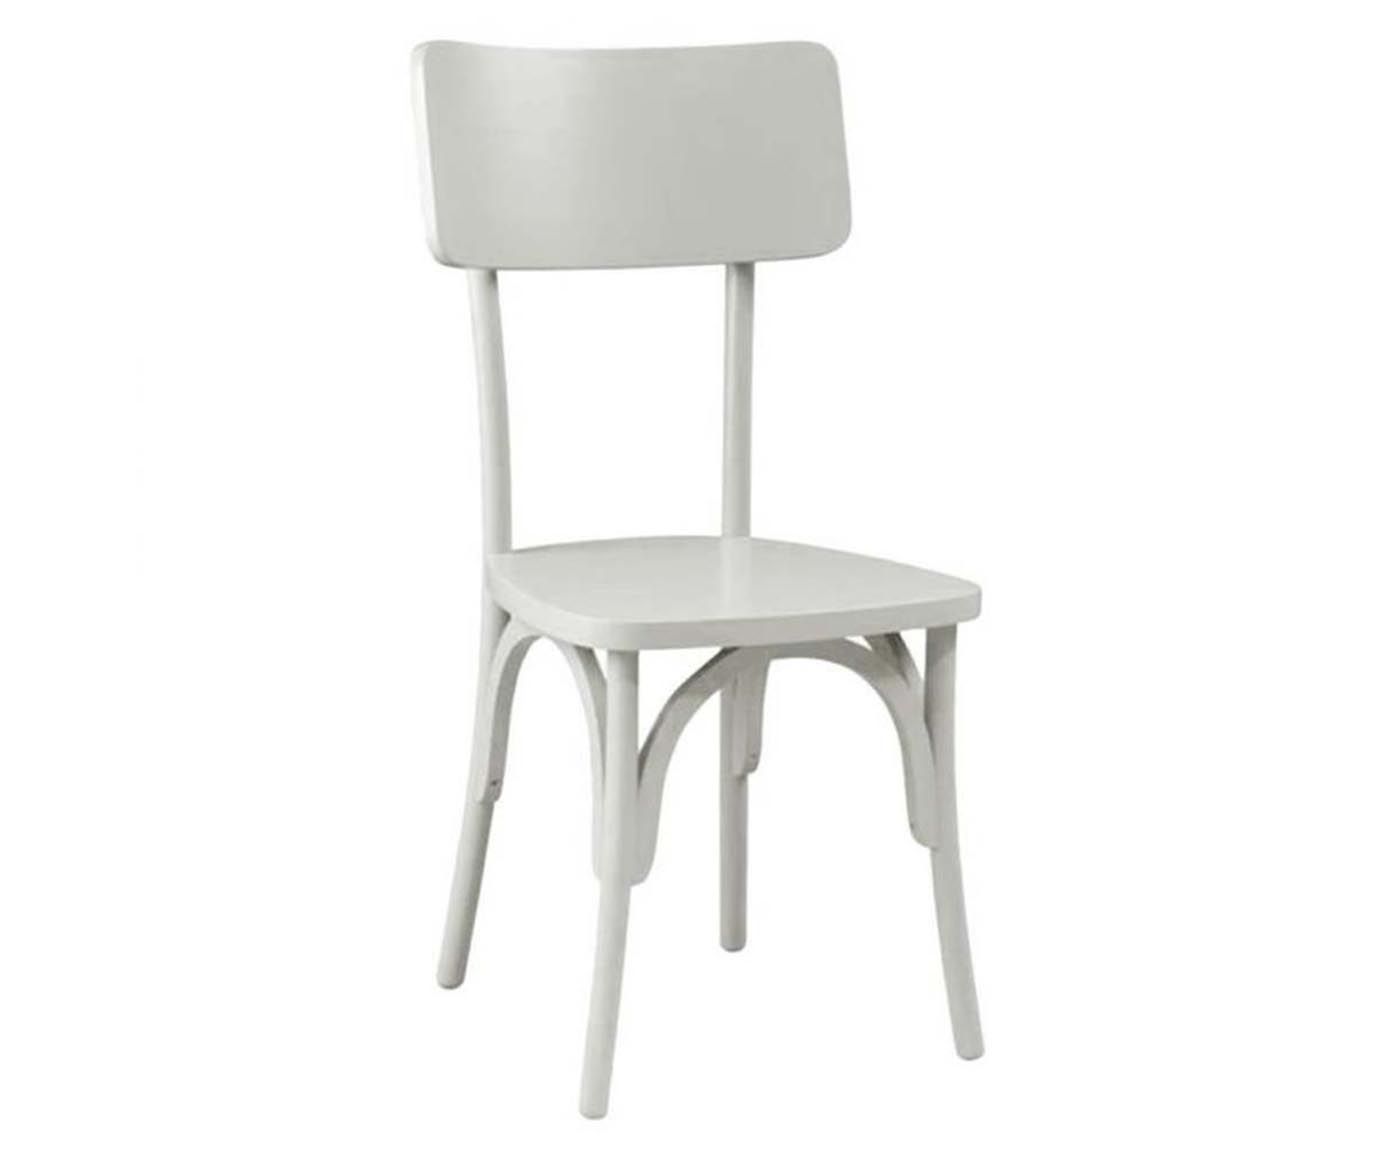 Cadeira romarin square - union | Westwing.com.br